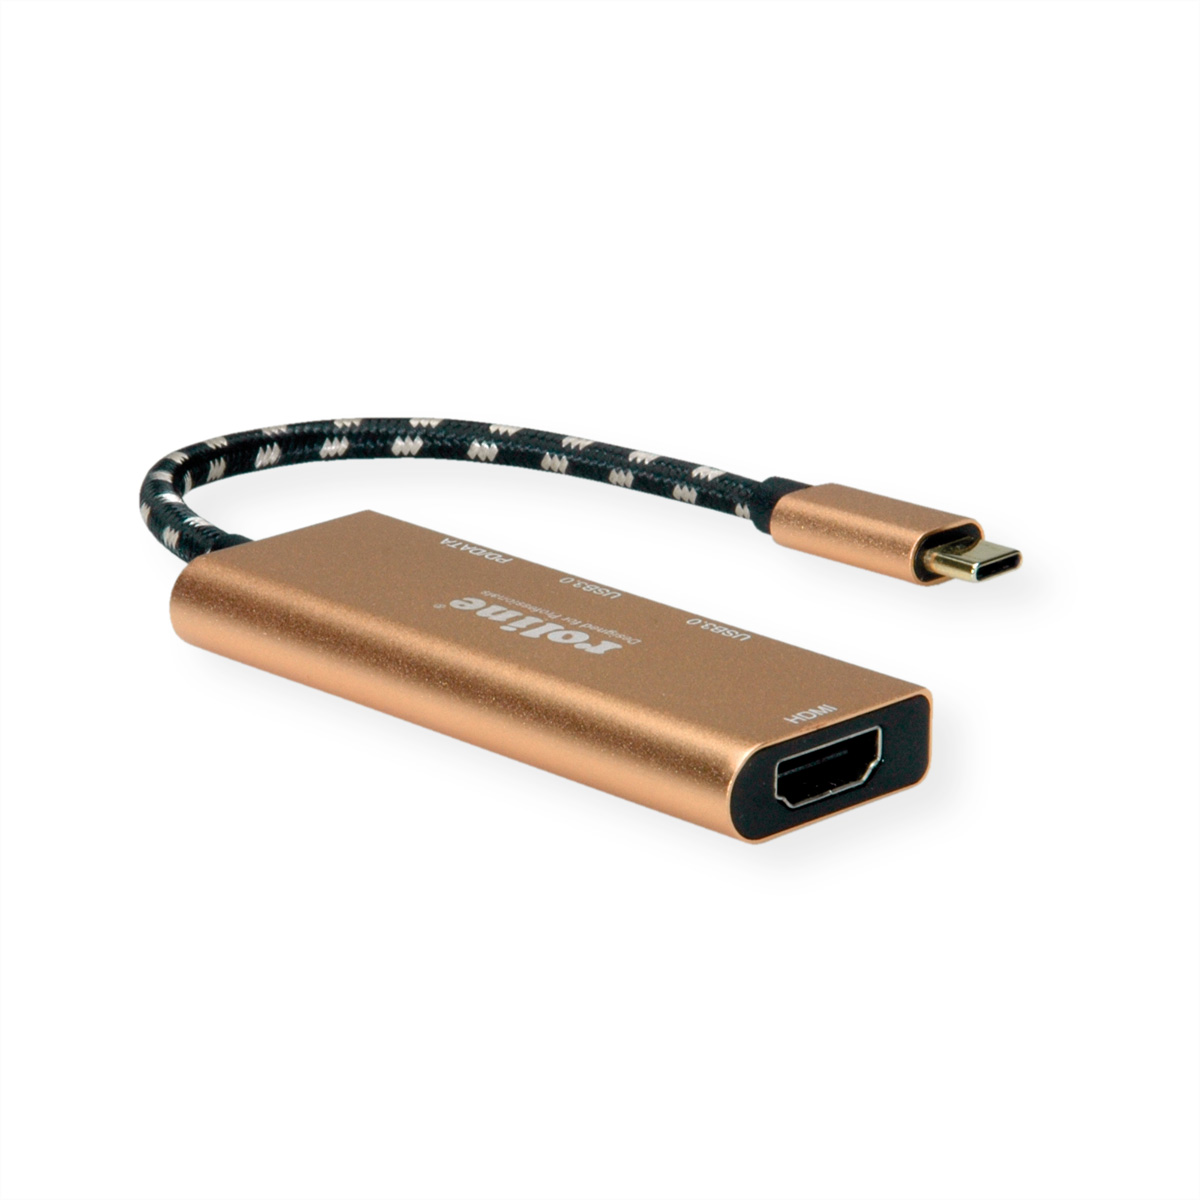 4K, 1, C USB Dockingstation, HDMI goldfarben USB Gen 3.2 1x ROLINE Typ Notebook-Docking-Station, 2x GOLD PD